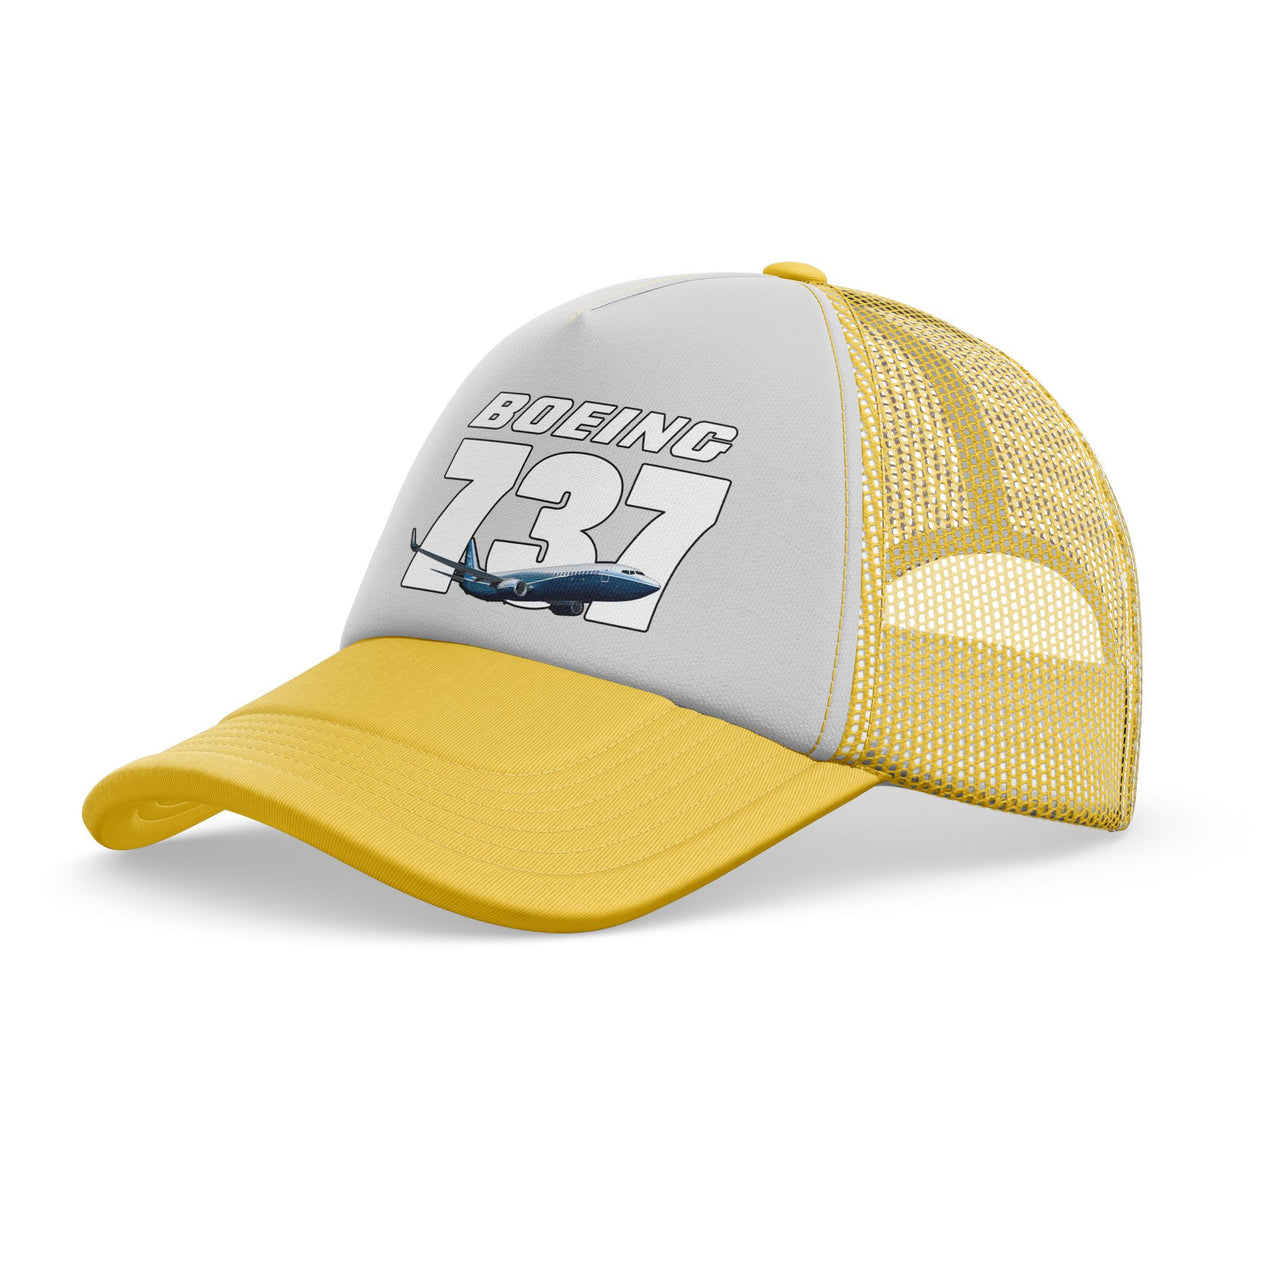 Super Boeing 737+Text Designed Trucker Caps & Hats